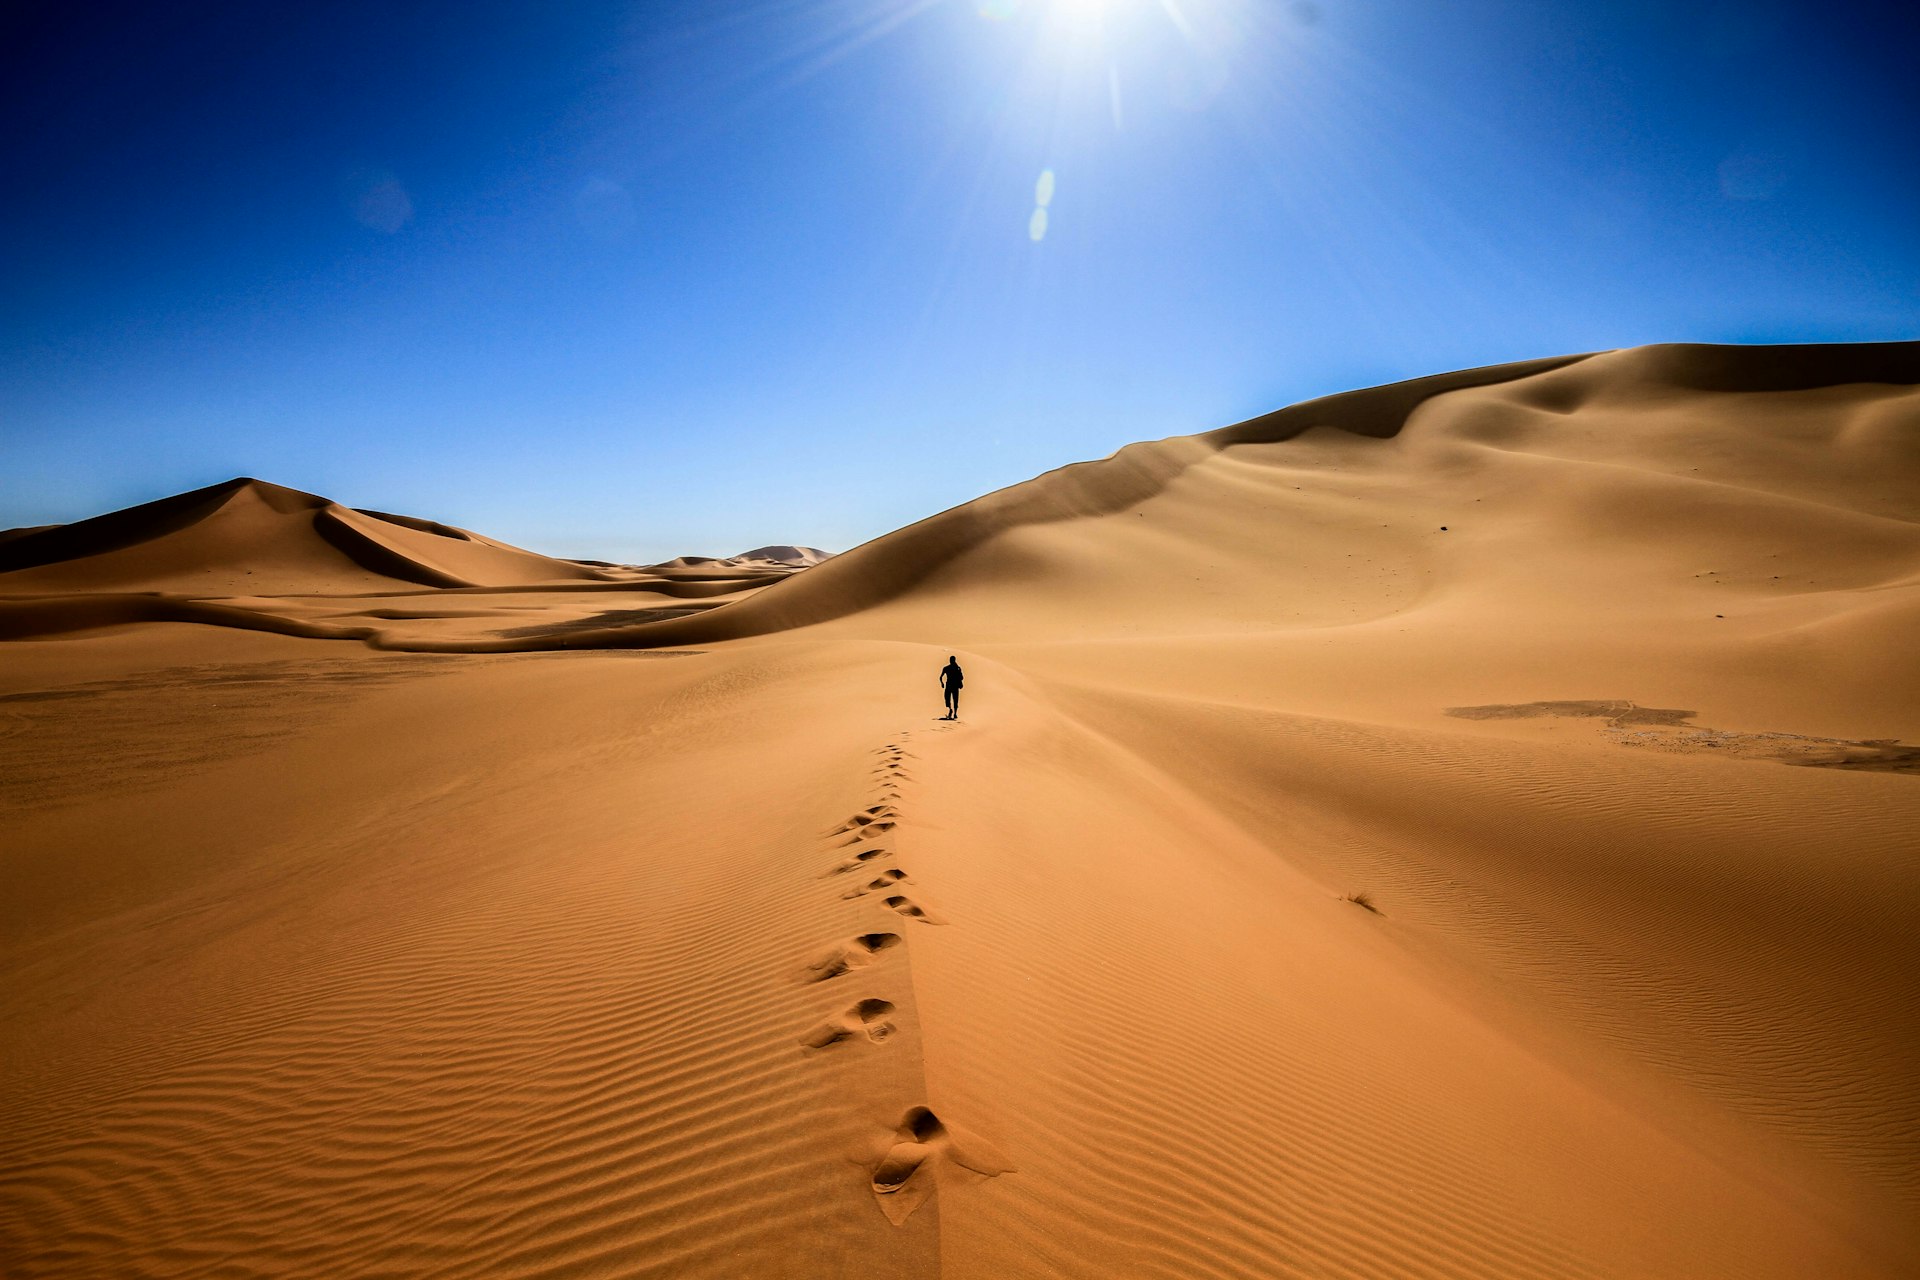 A lone figure walks through a vast sandy desert in Algeria, leaving footprints behind them.